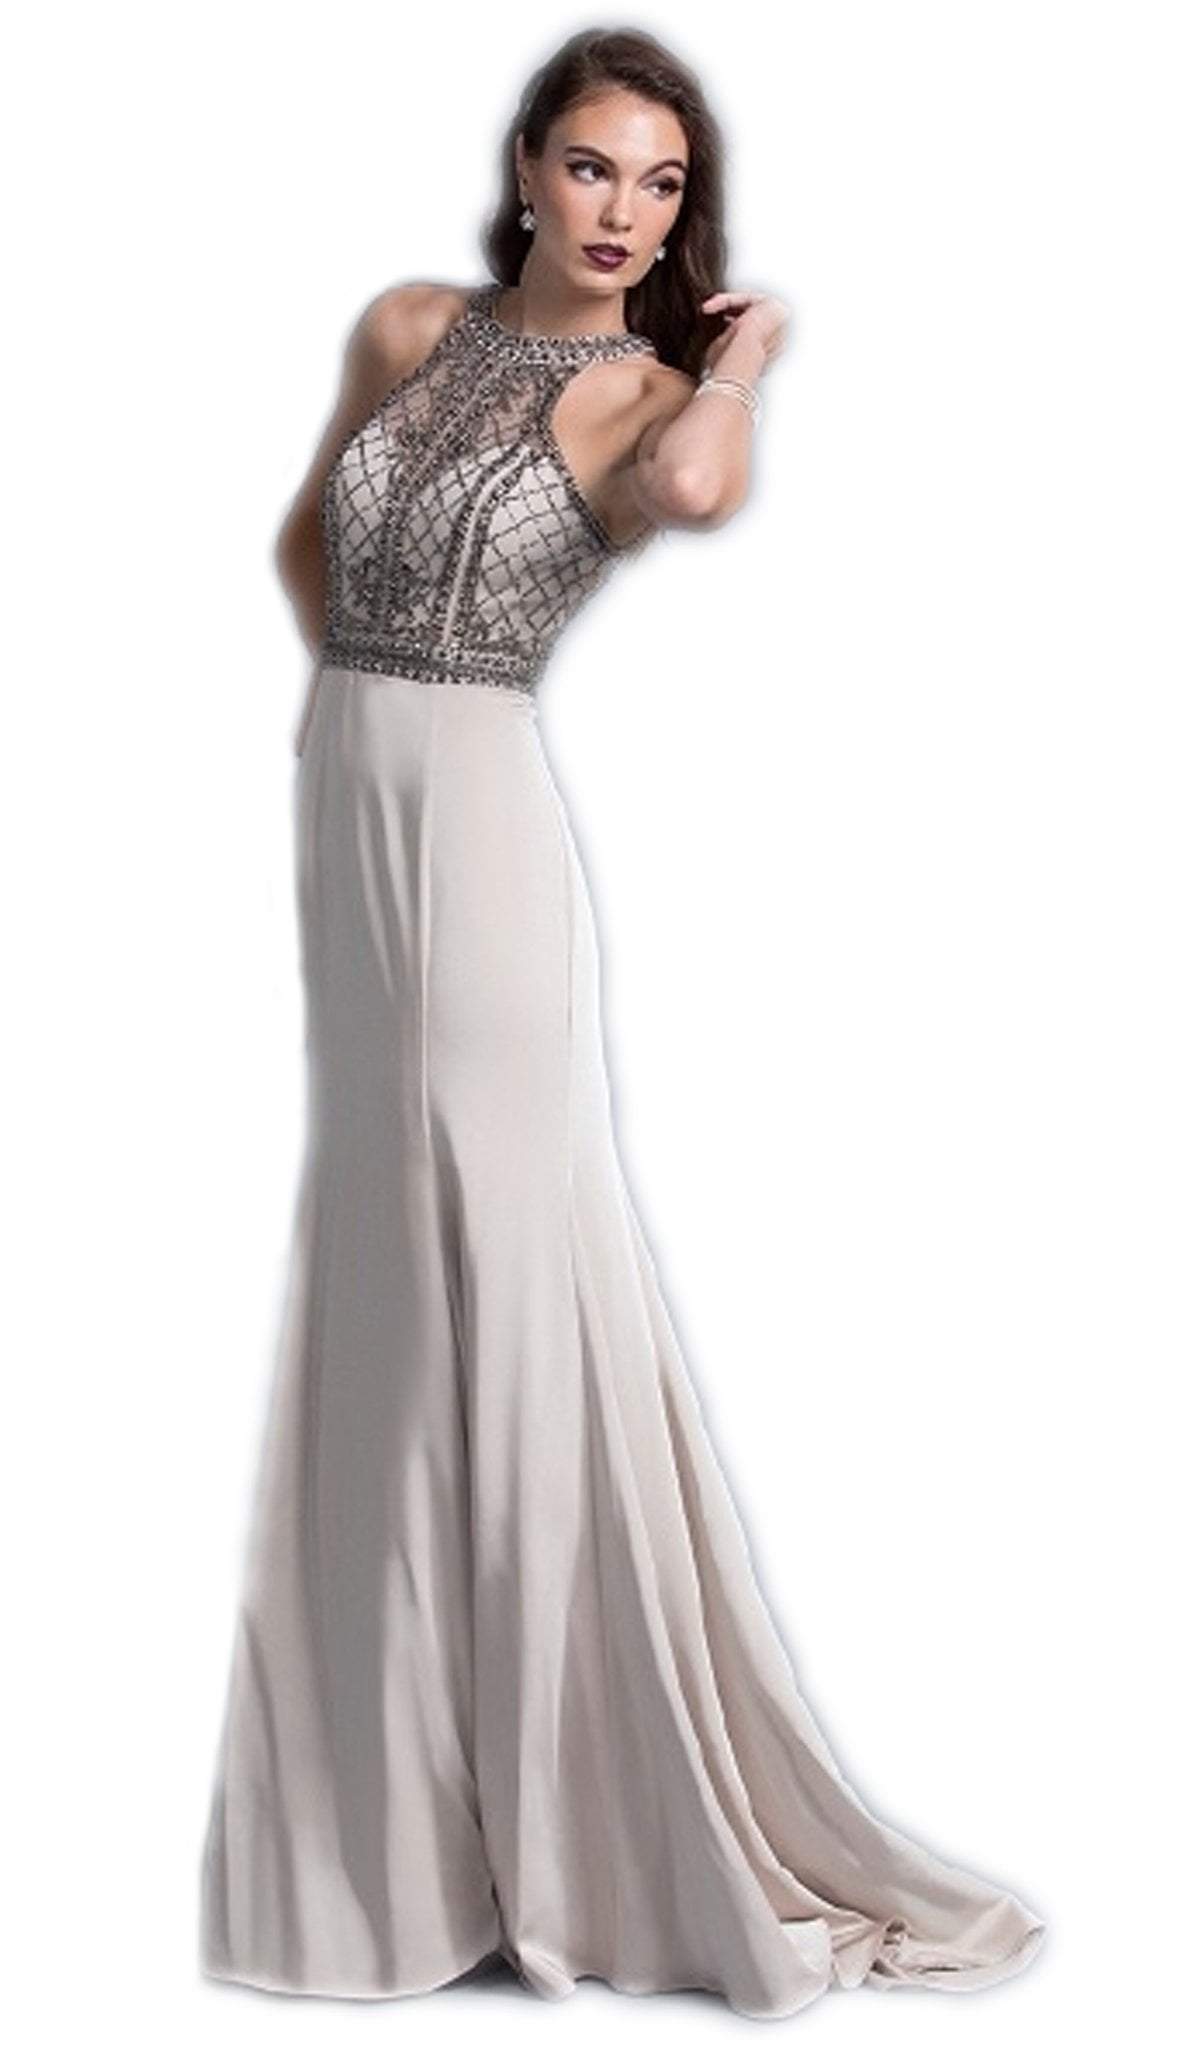 Aspeed Design - Jewel Accented Halter Prom A-line Dress
